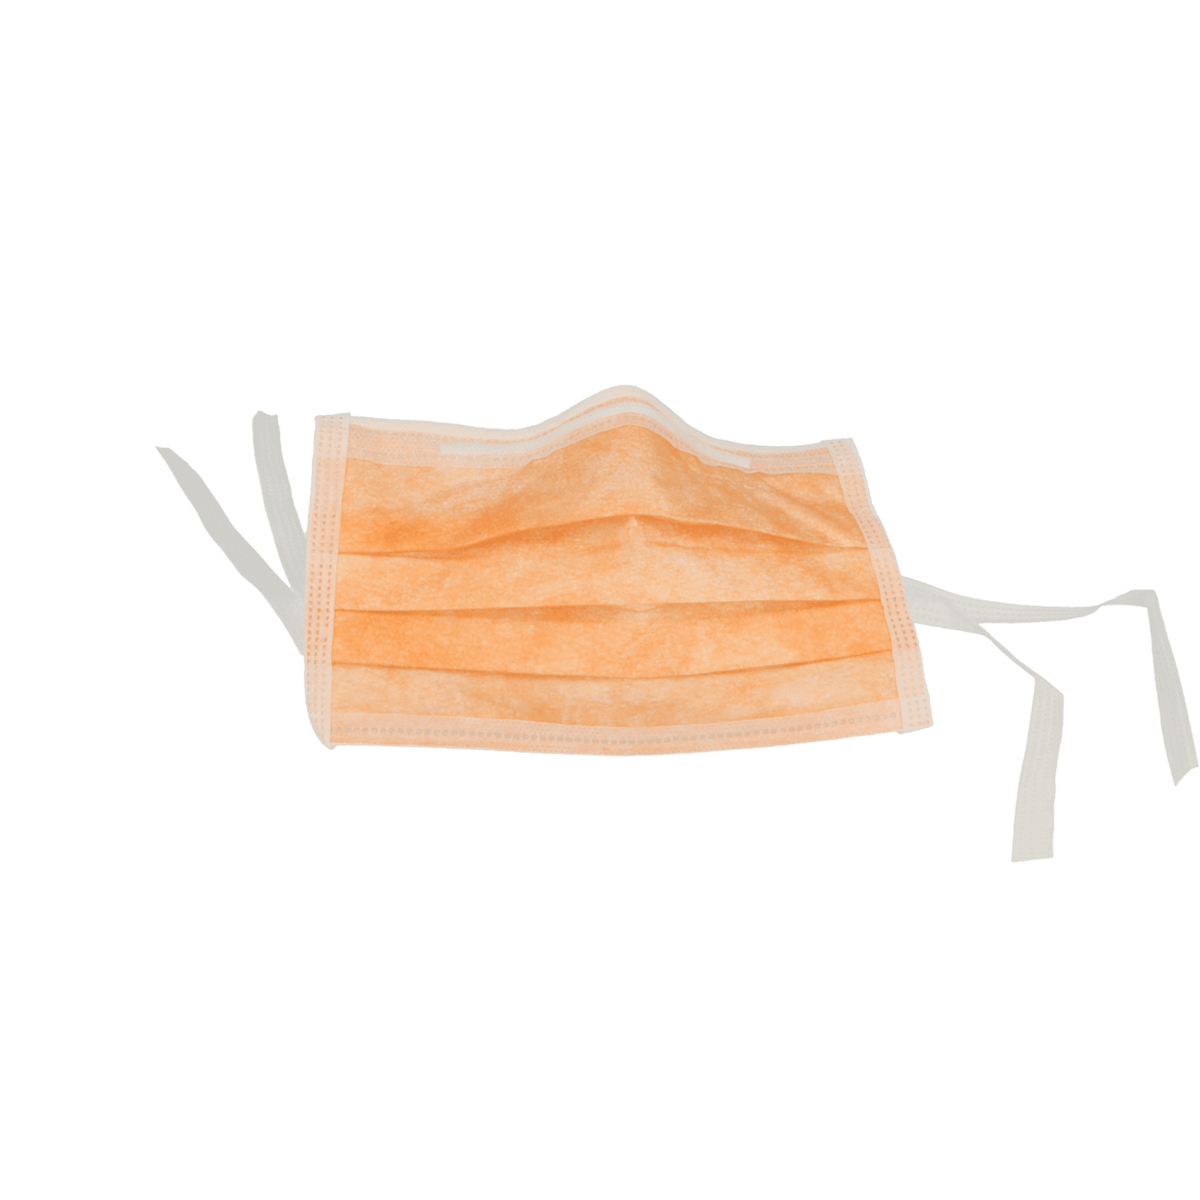 Monoart Protection 3 - zum Binden Farbe: orange